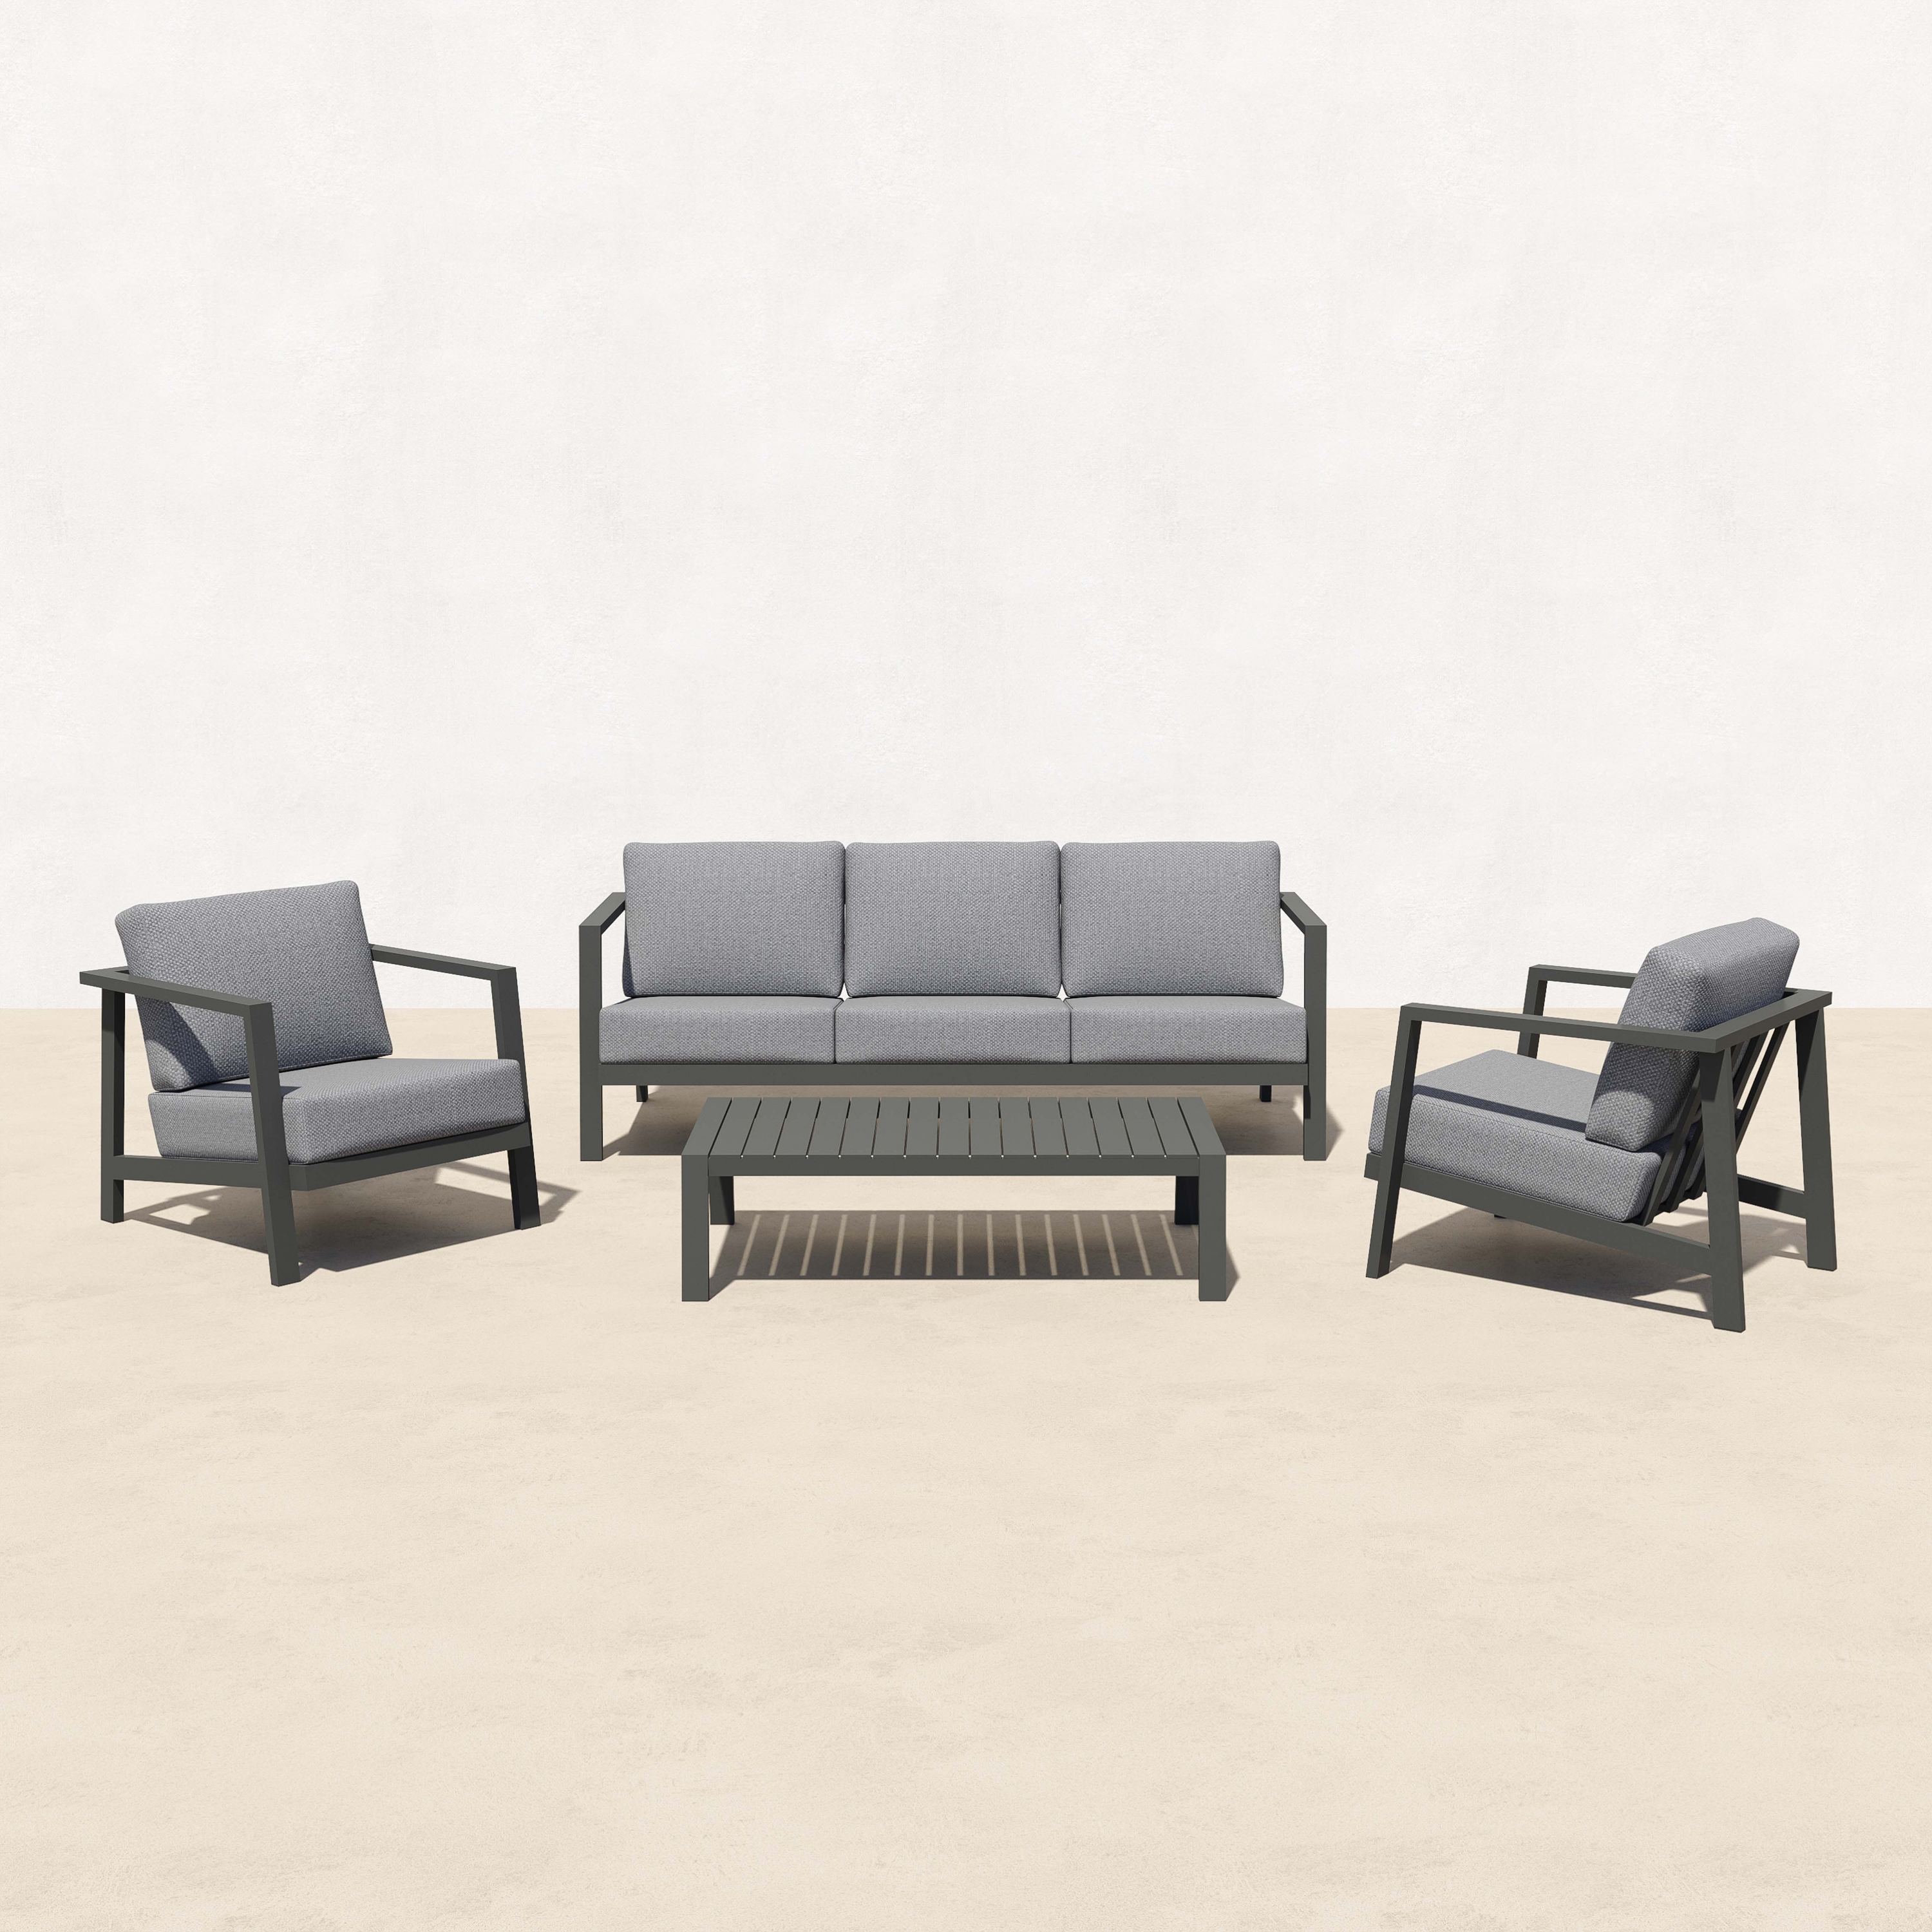 KATE Aluminum Outdoor Sofa with Coffee Table - 5 Seat-Baeryon Furniture